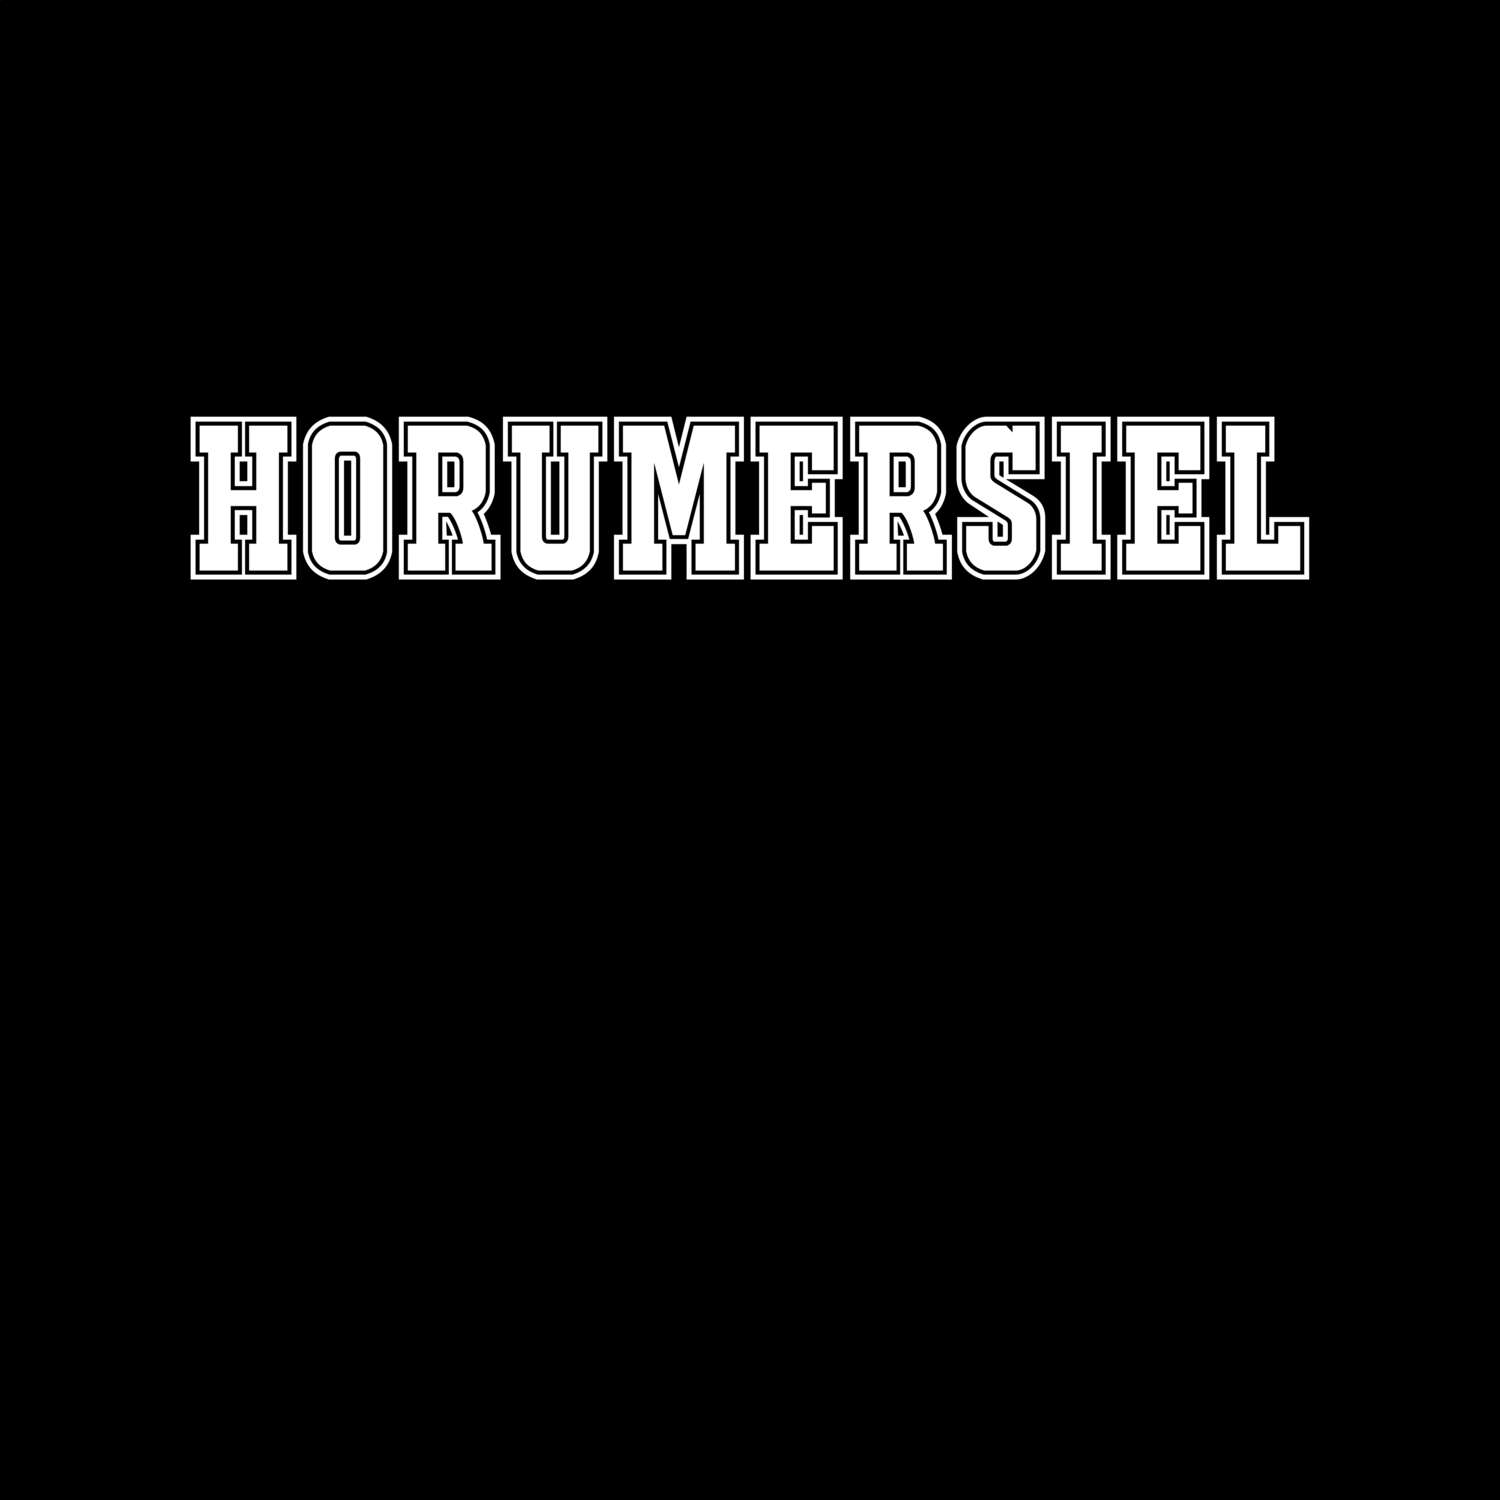 Horumersiel T-Shirt »Classic«